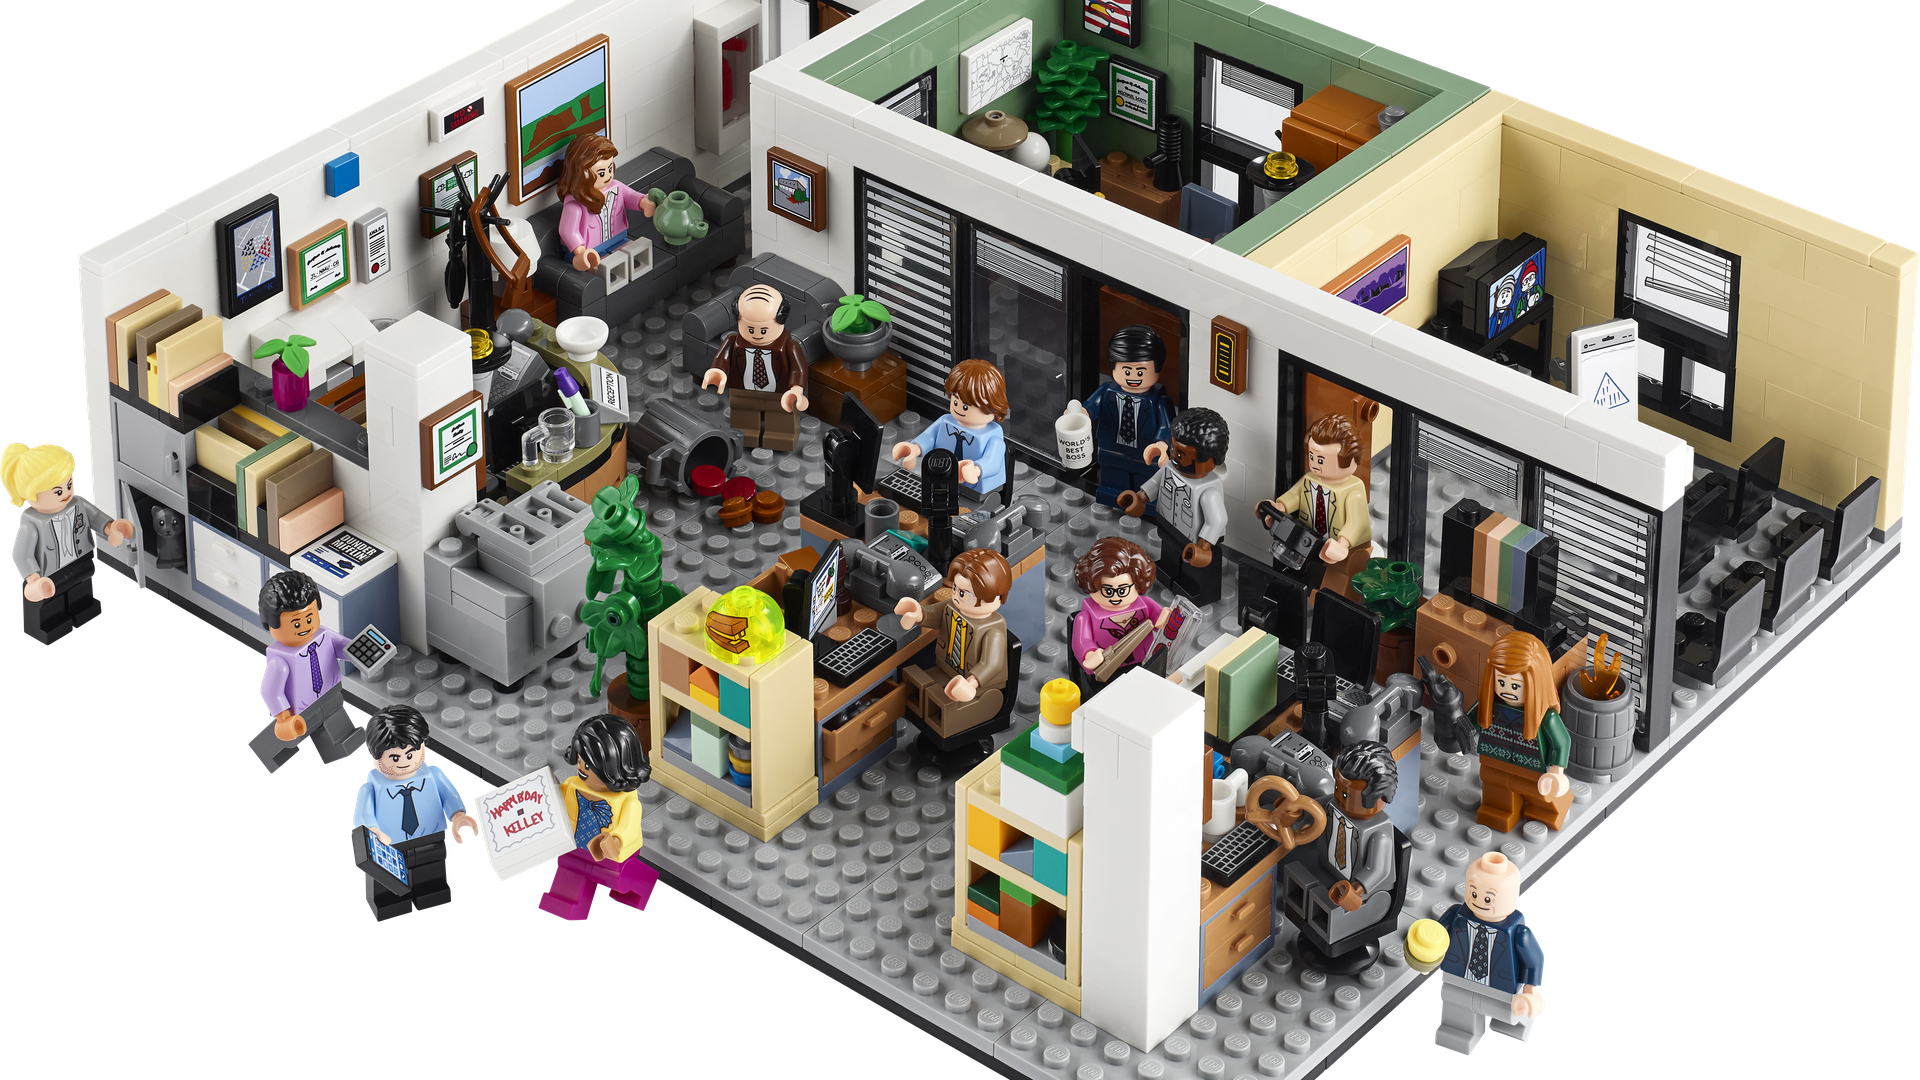 Lego's 1,164-piece set of "The Office" faithfully recreates Dunder Mifflin Scranton